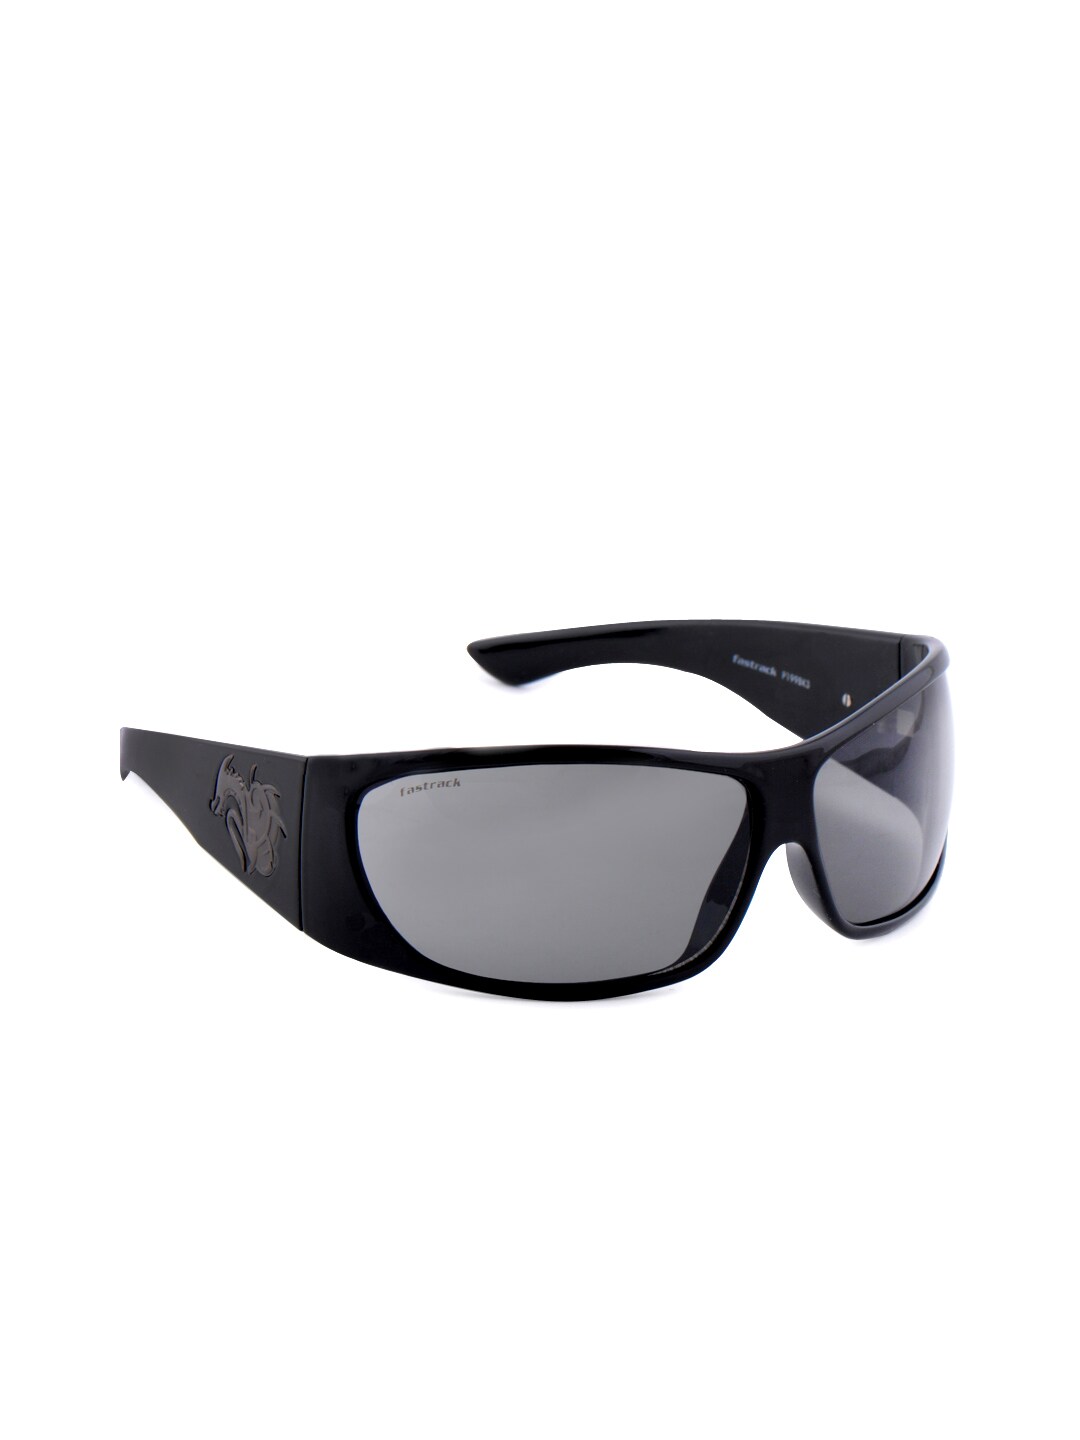 Fastrack Unisex Black Sunglasses